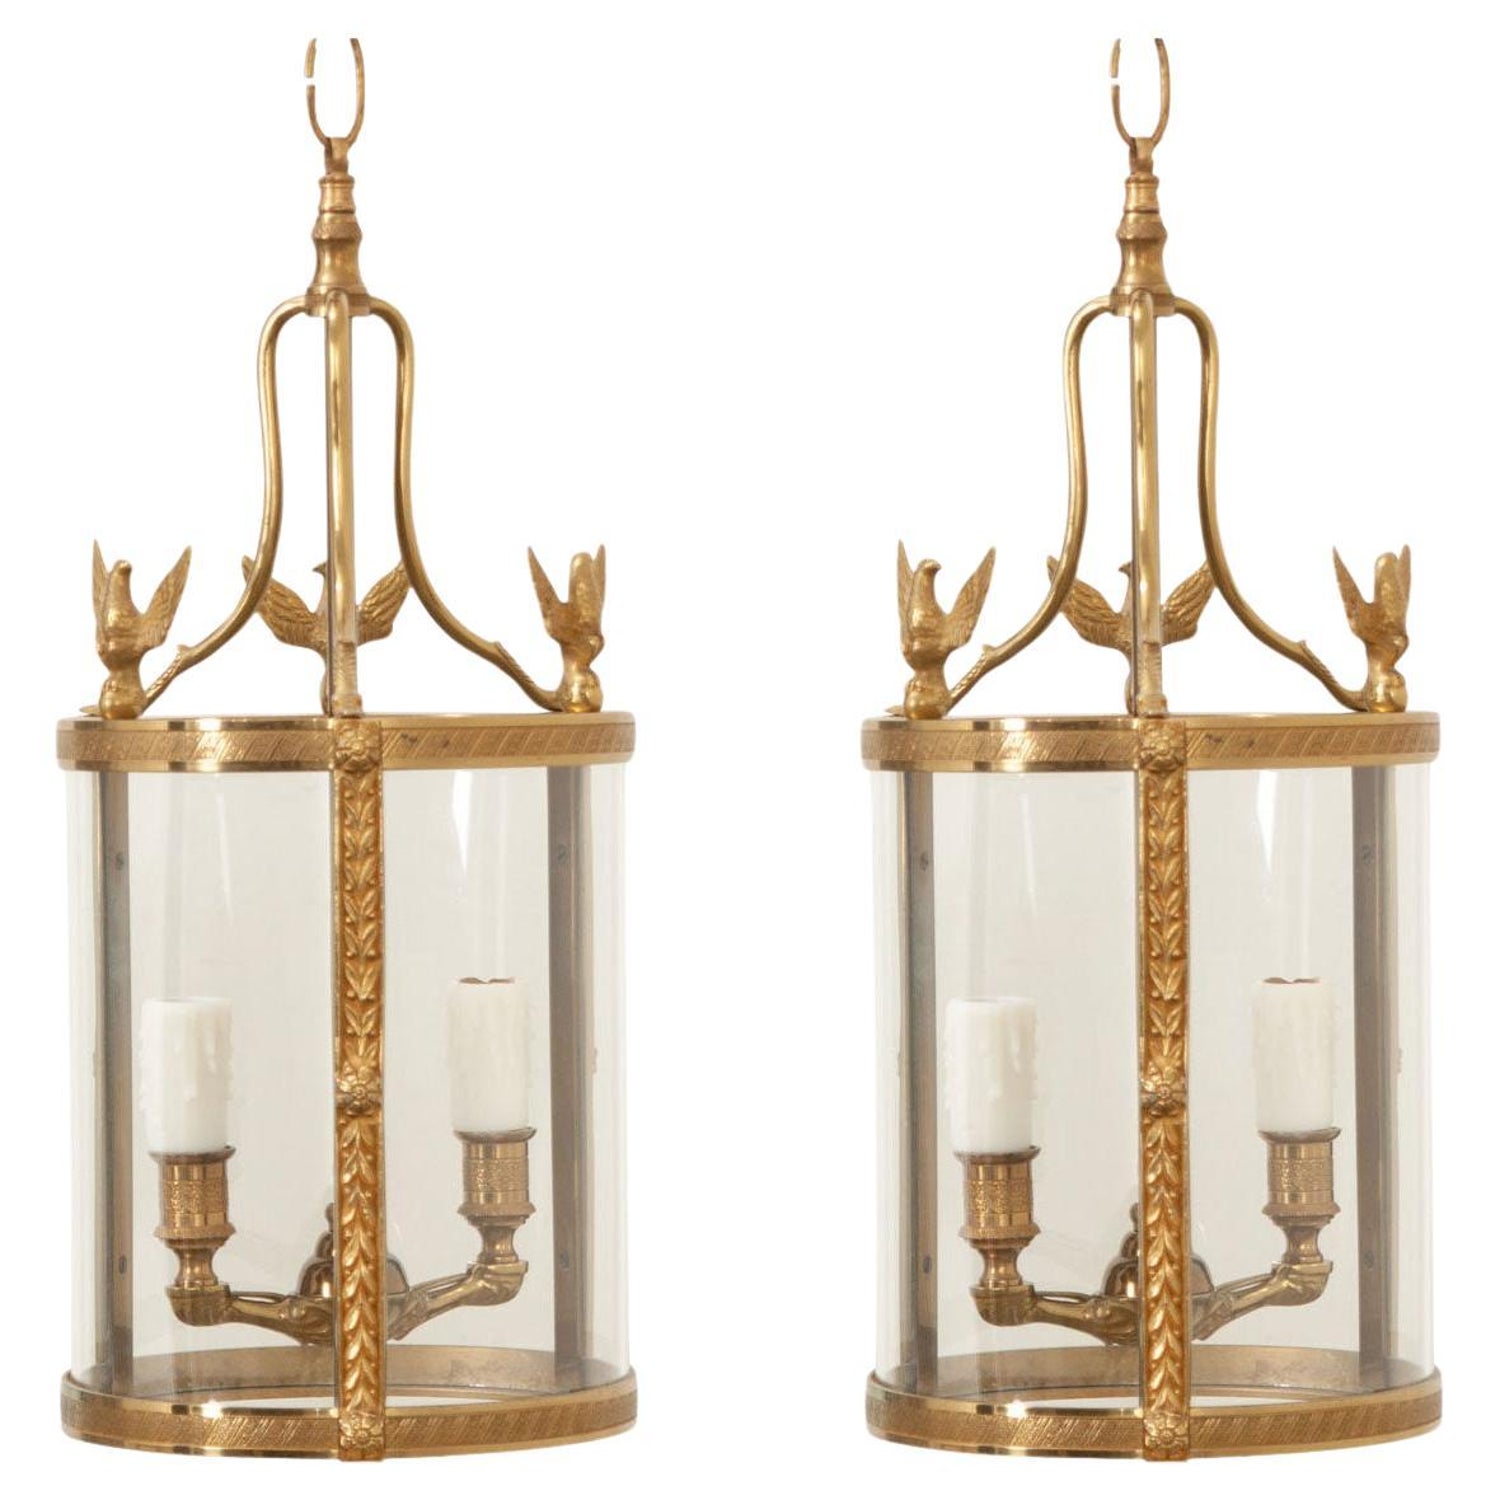 https://a.1stdibscdn.com/french-pair-of-petite-brass-lanterns-for-sale/f_8648/f_375336021702410322265/f_37533602_1702410322576_bg_processed.jpg?width=1500